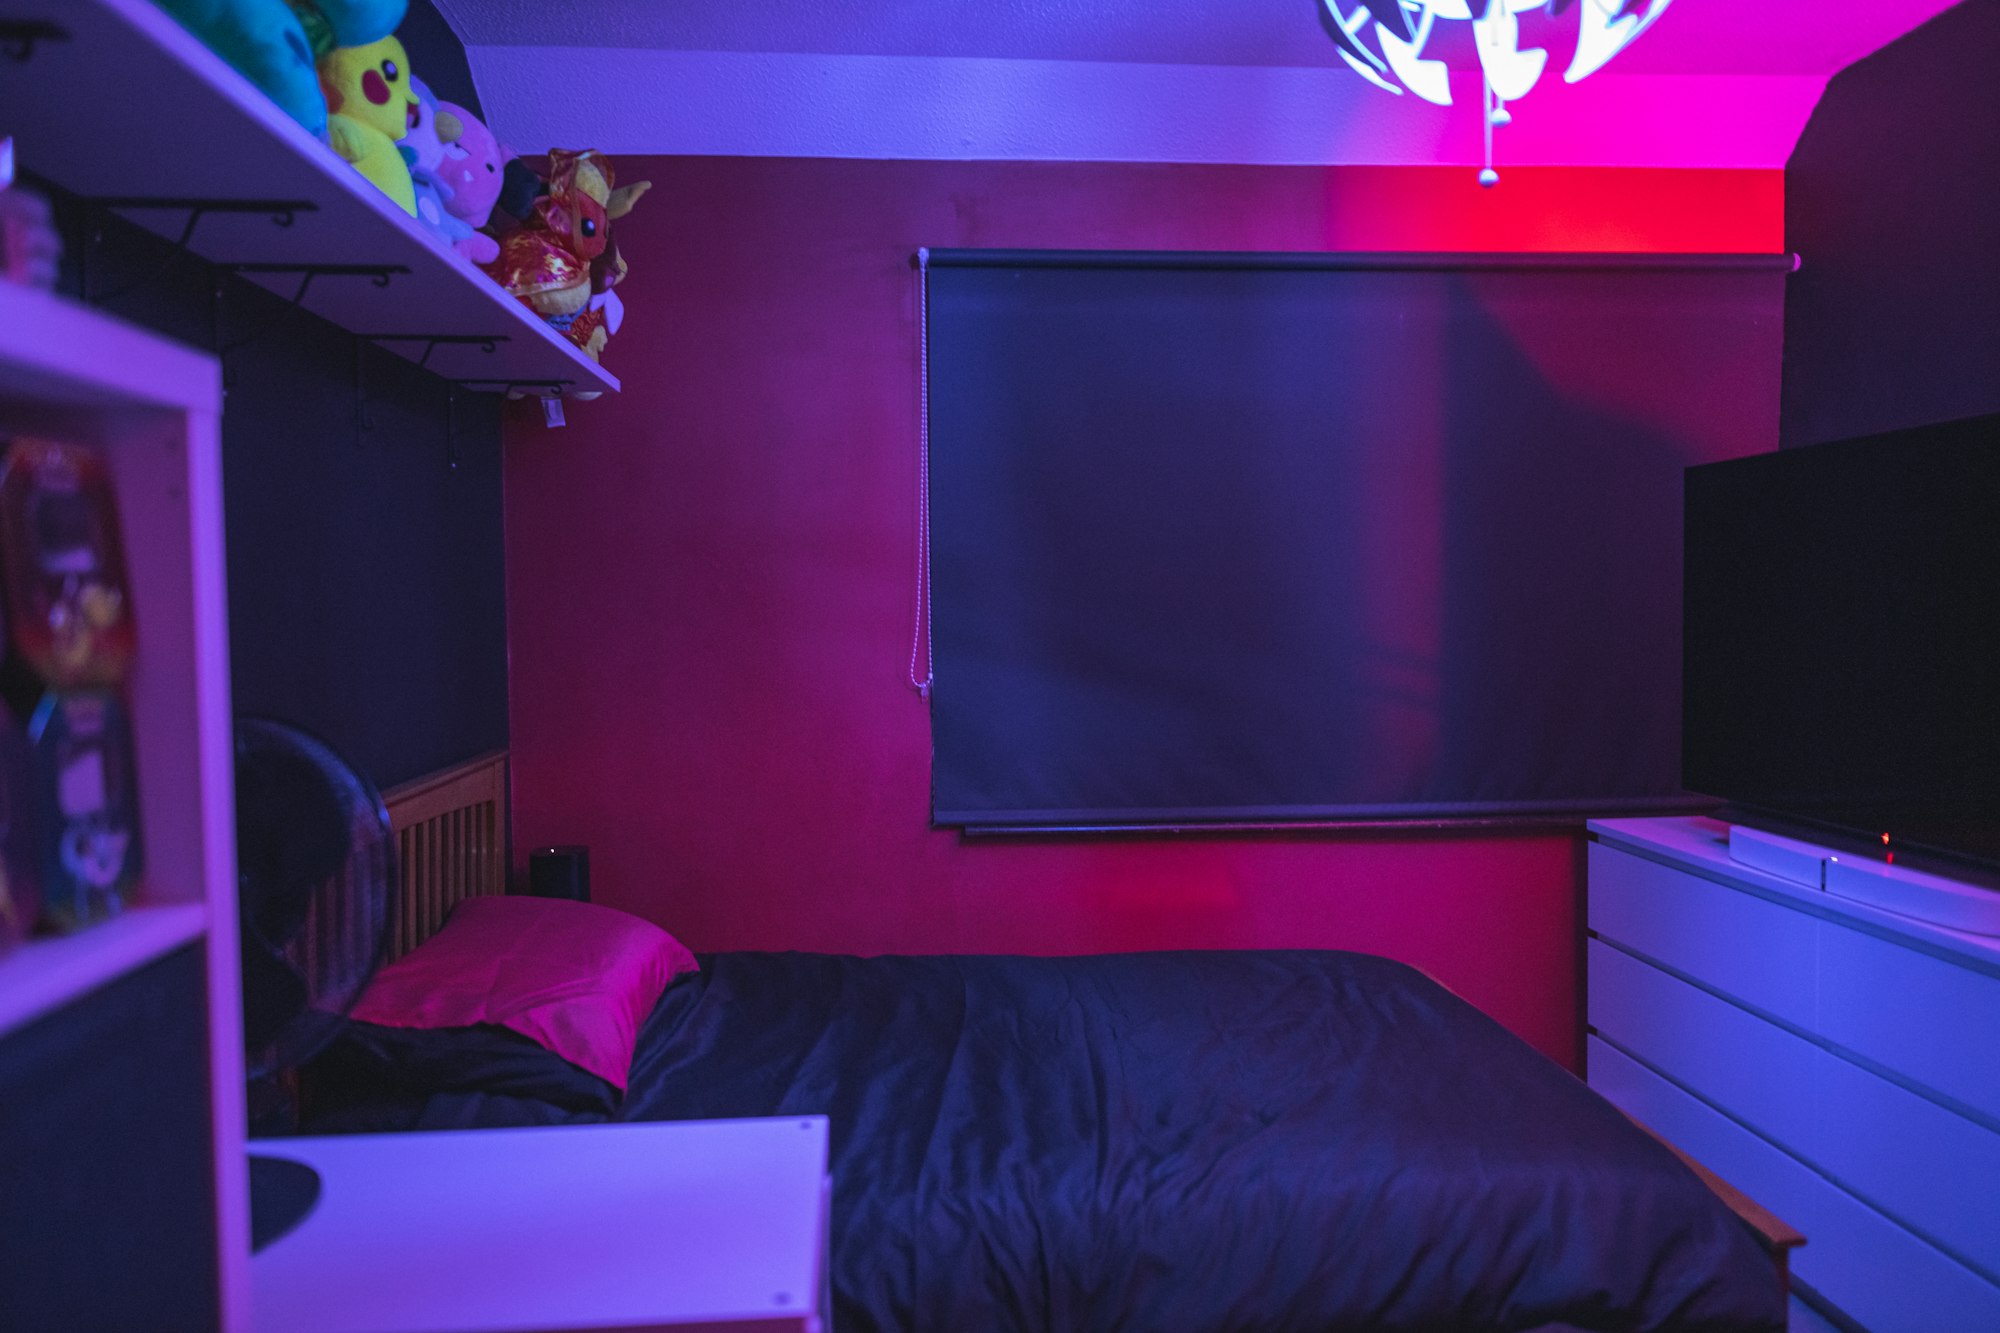 60 Glamorous Teenage Girl's Bedrooms - CREATIVE DESIGN IDEAS 